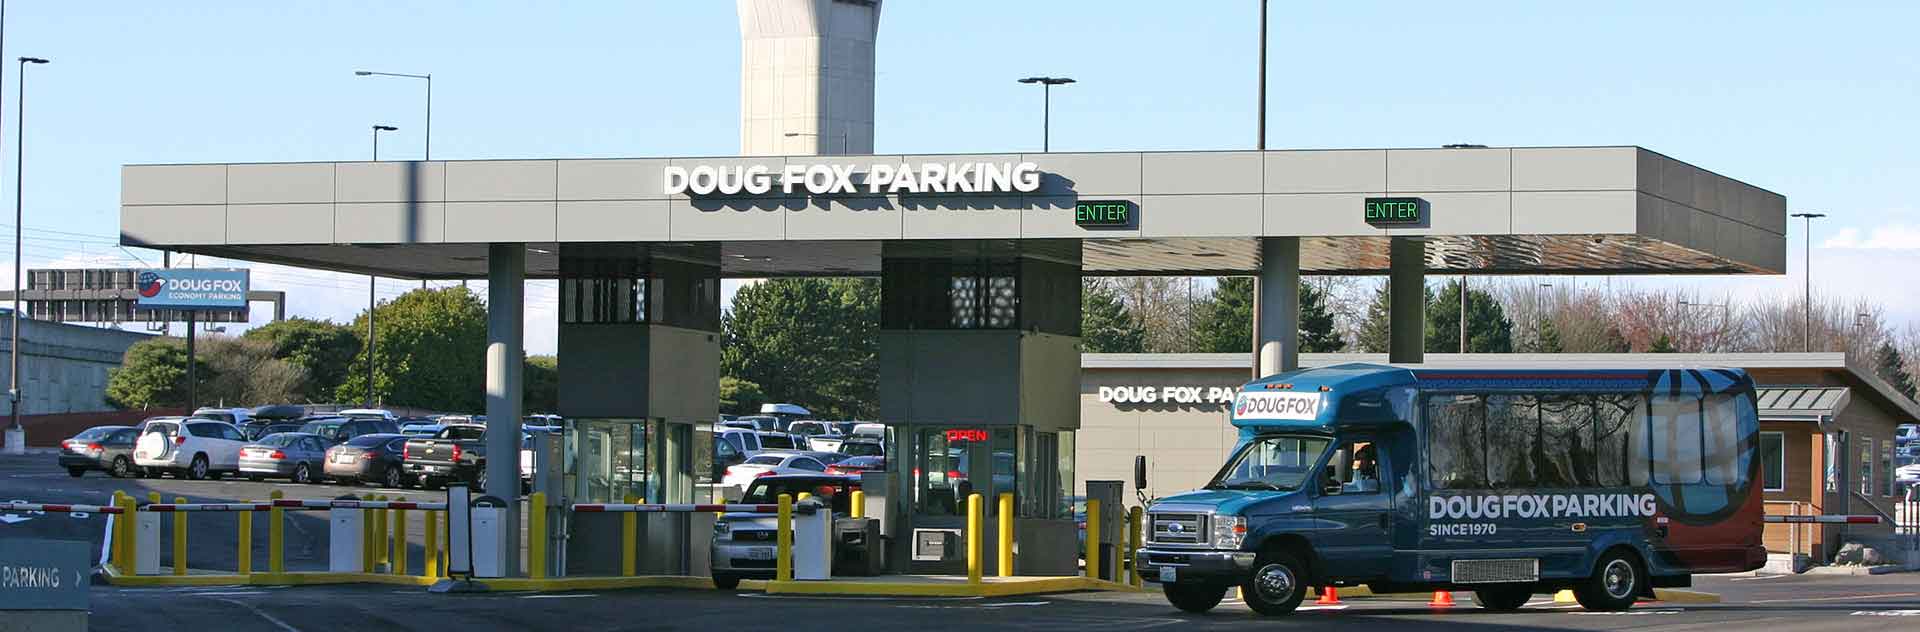 Doug Fox Airport Parking